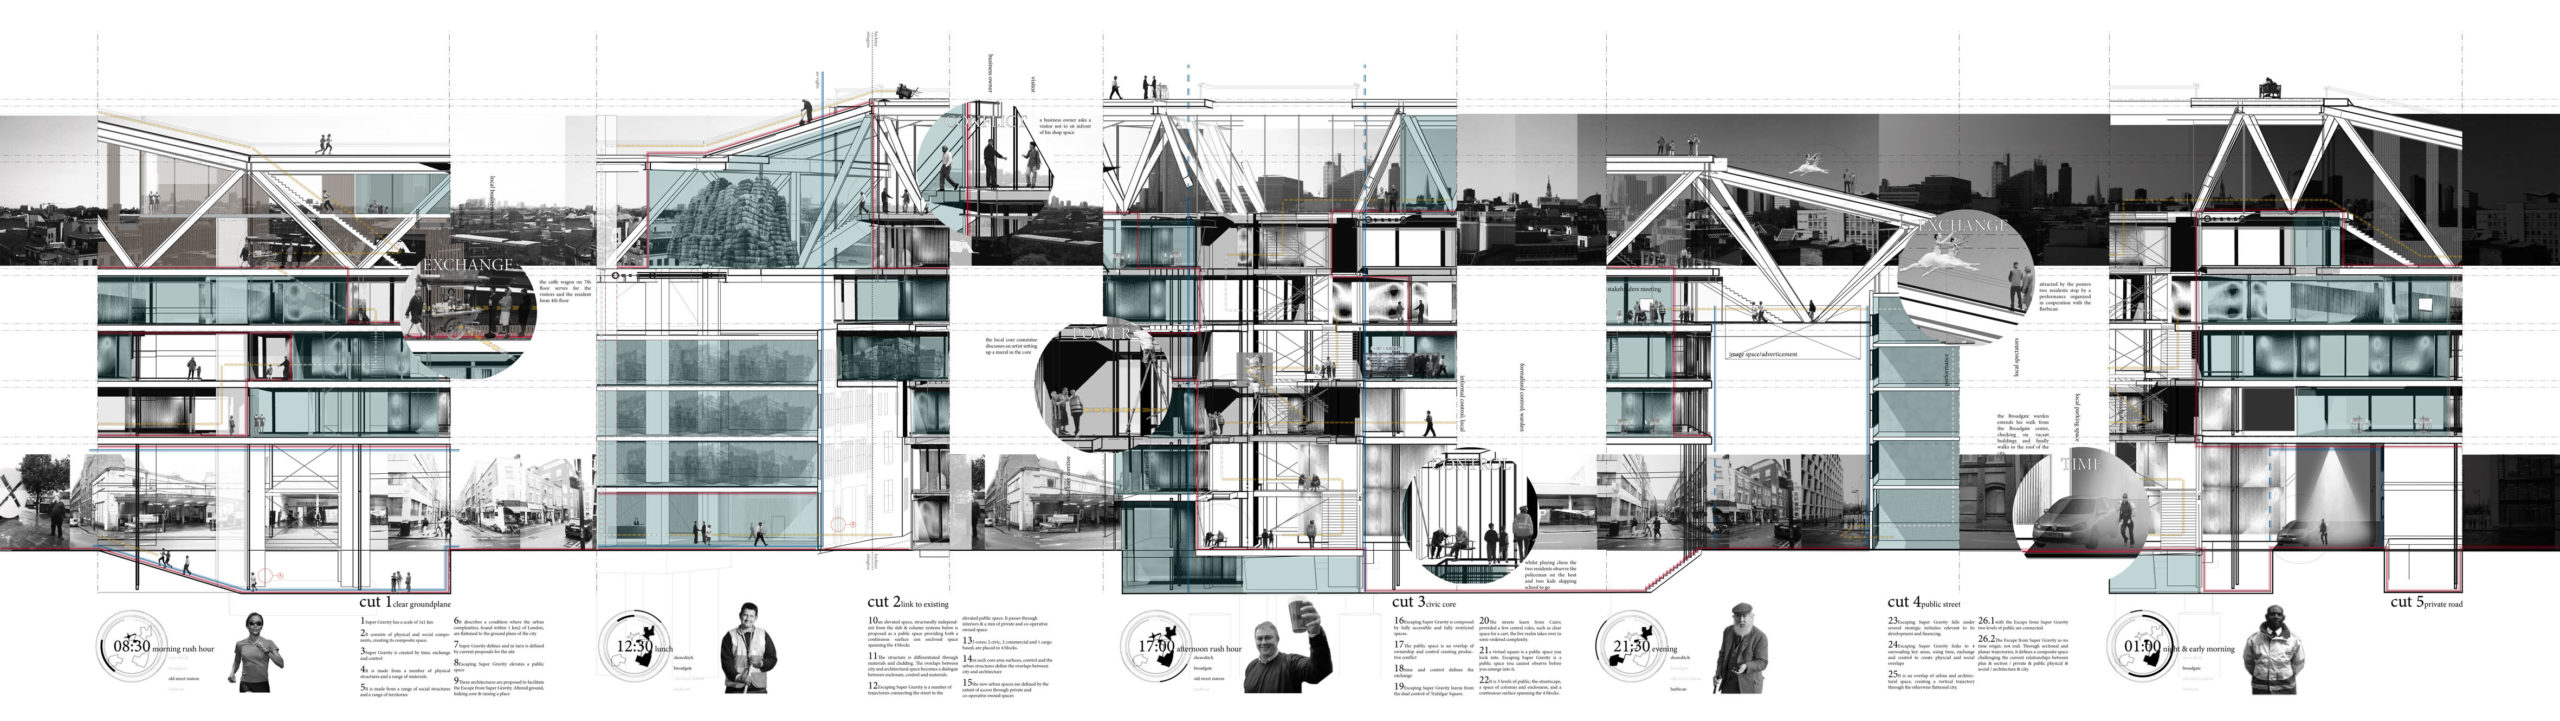 architecture concepts and representation